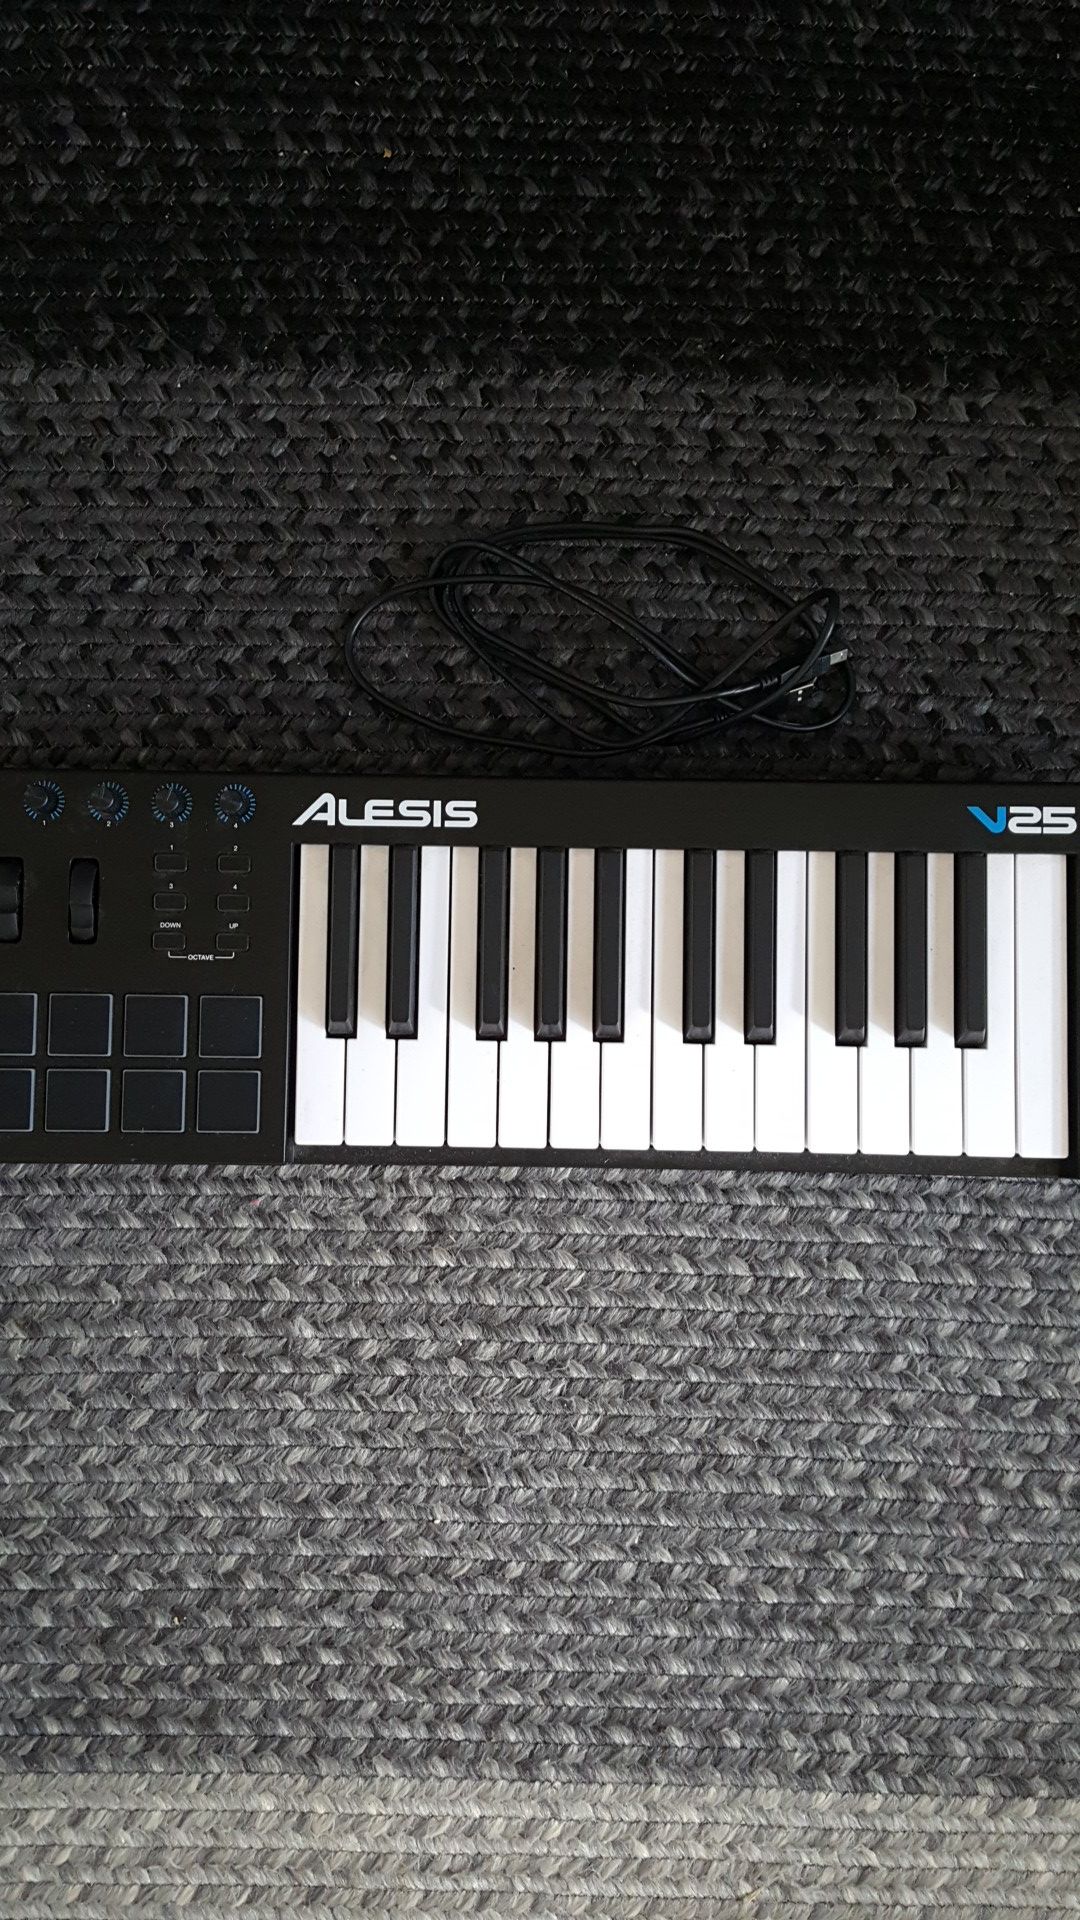 Alesis V25 midi keyboard